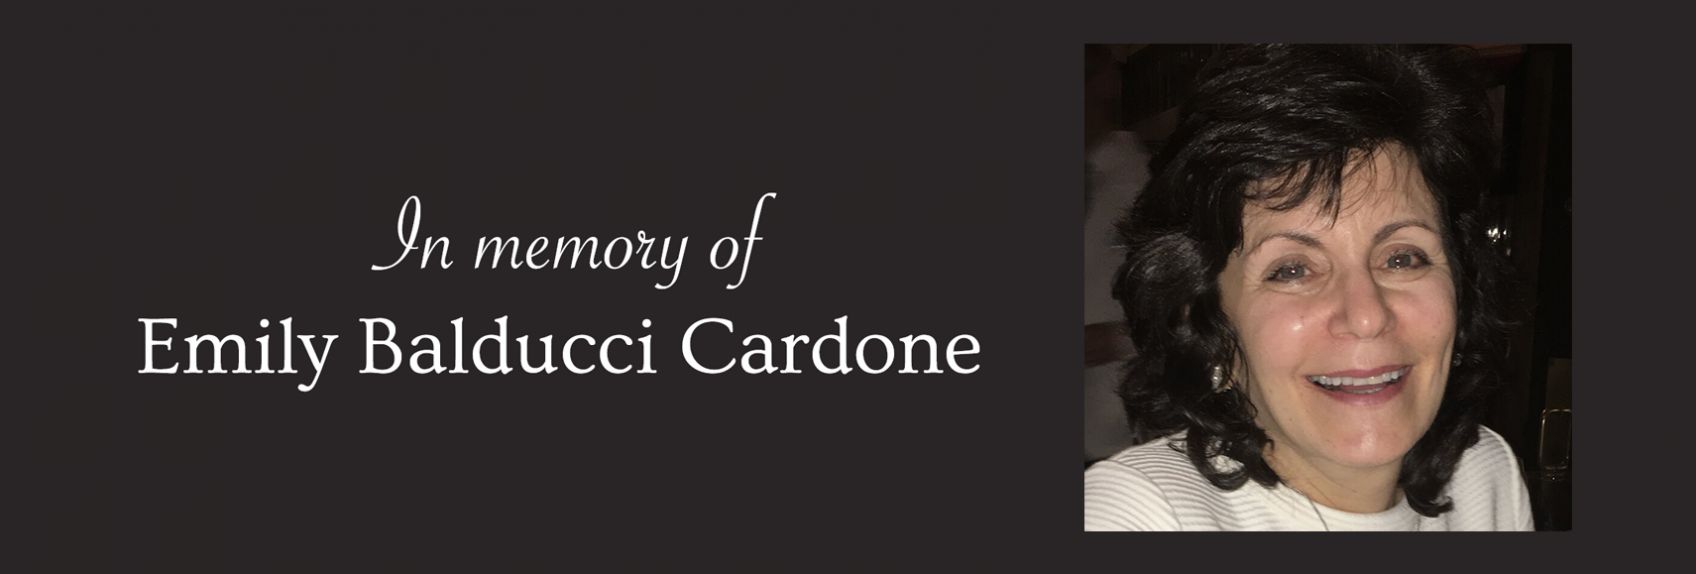 Remembering Emily Balducci Cardone